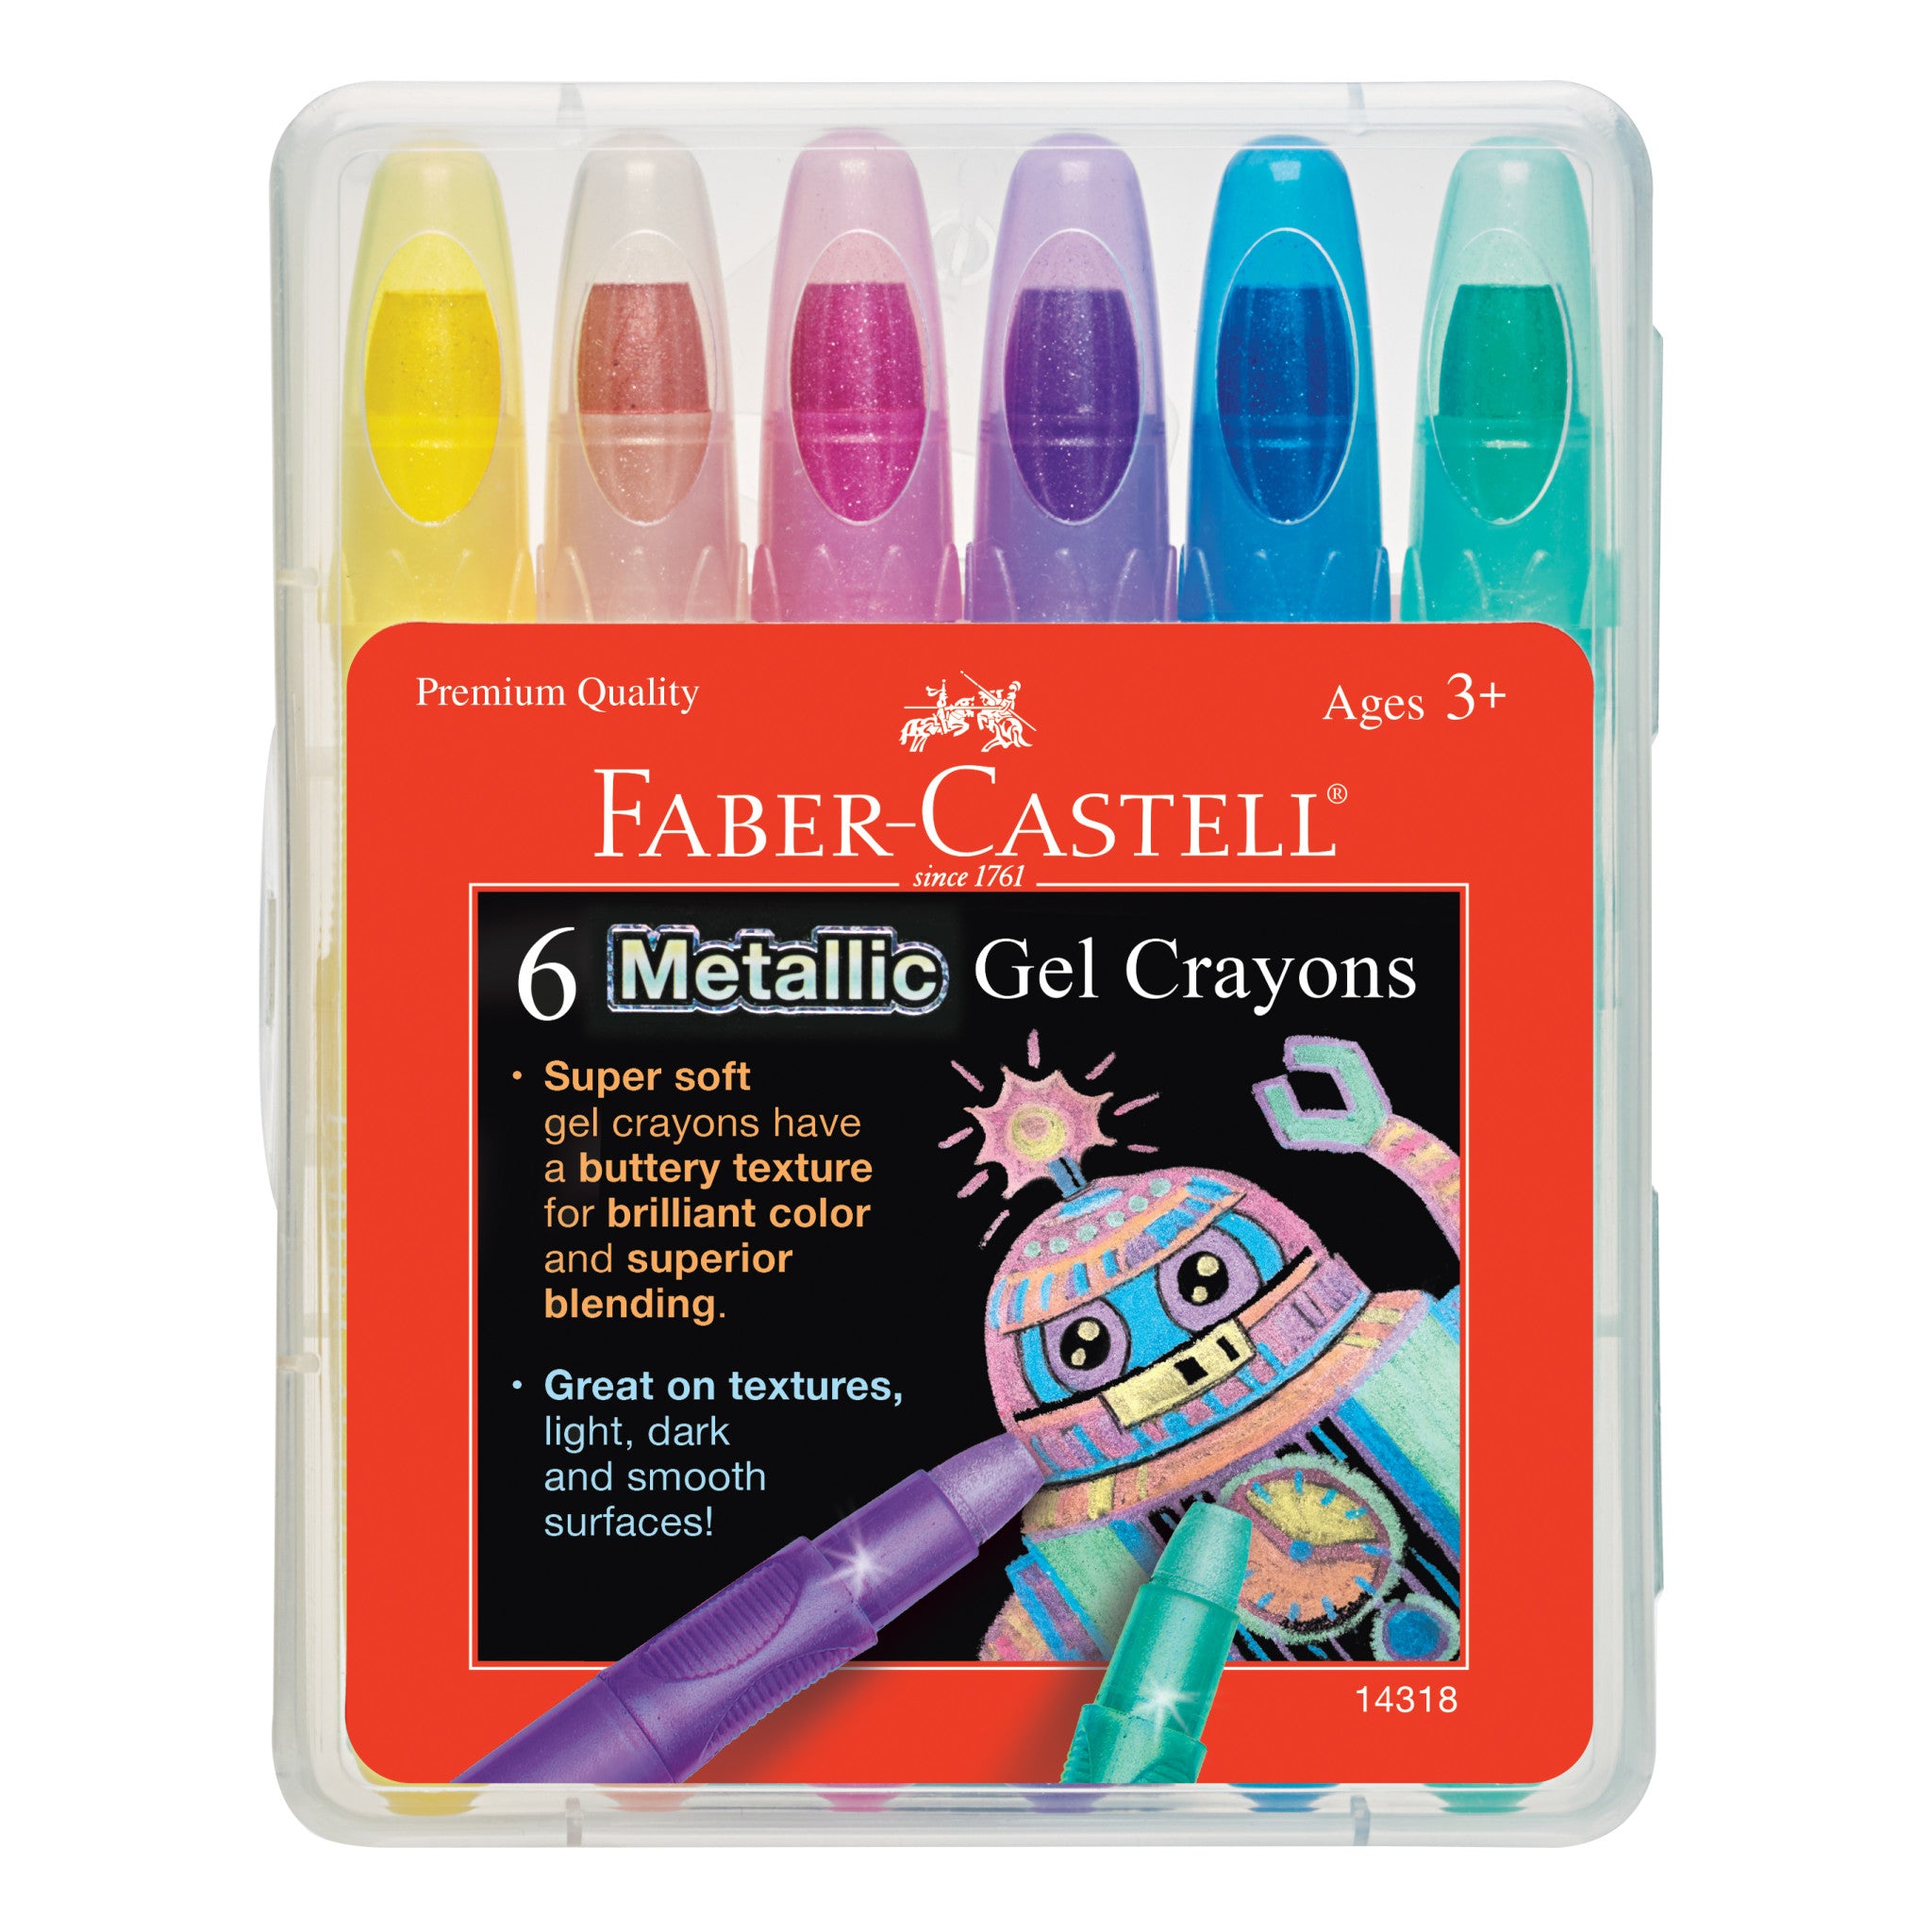 Metallic Crayons 